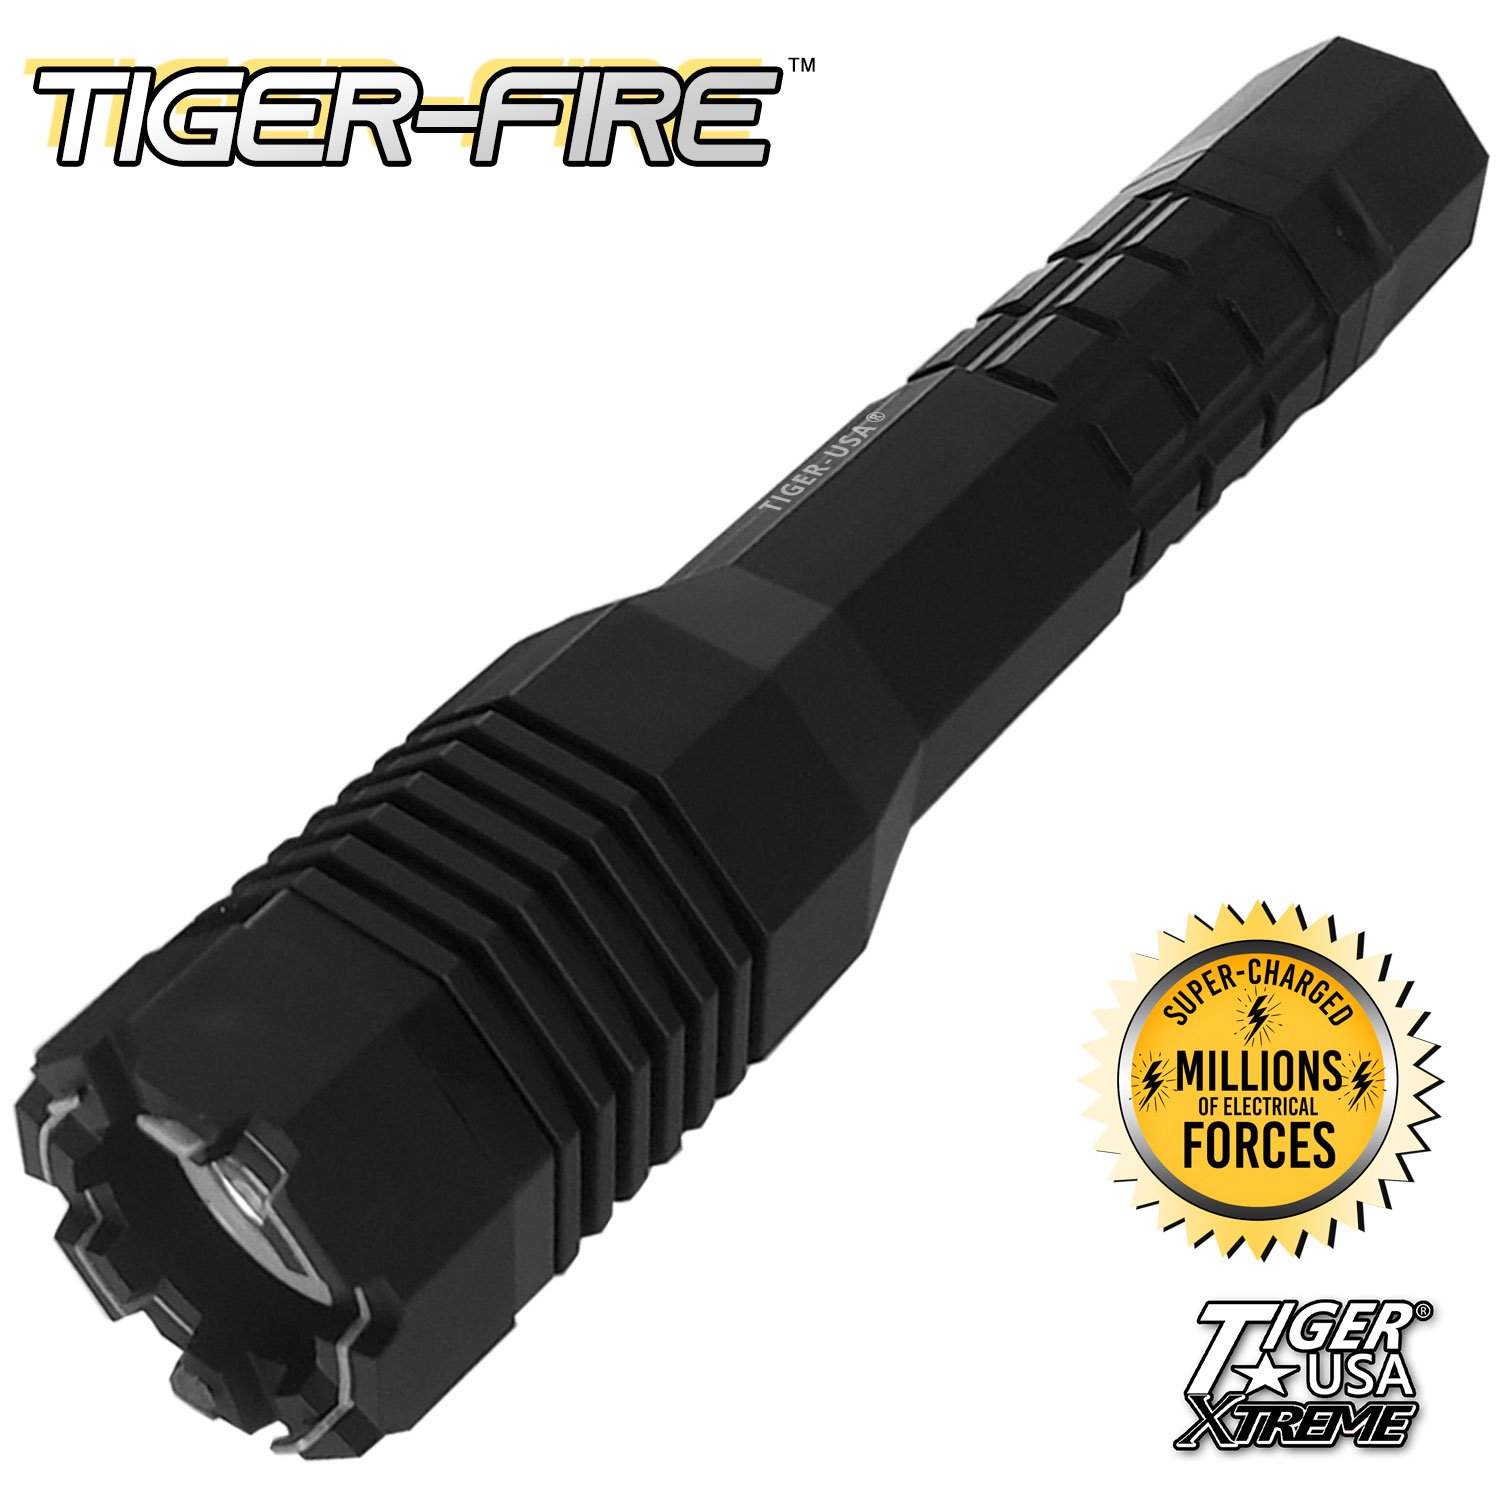 180 Mill V Tiger Fire Tiger USA Xtreme Stun Gun Flashlight